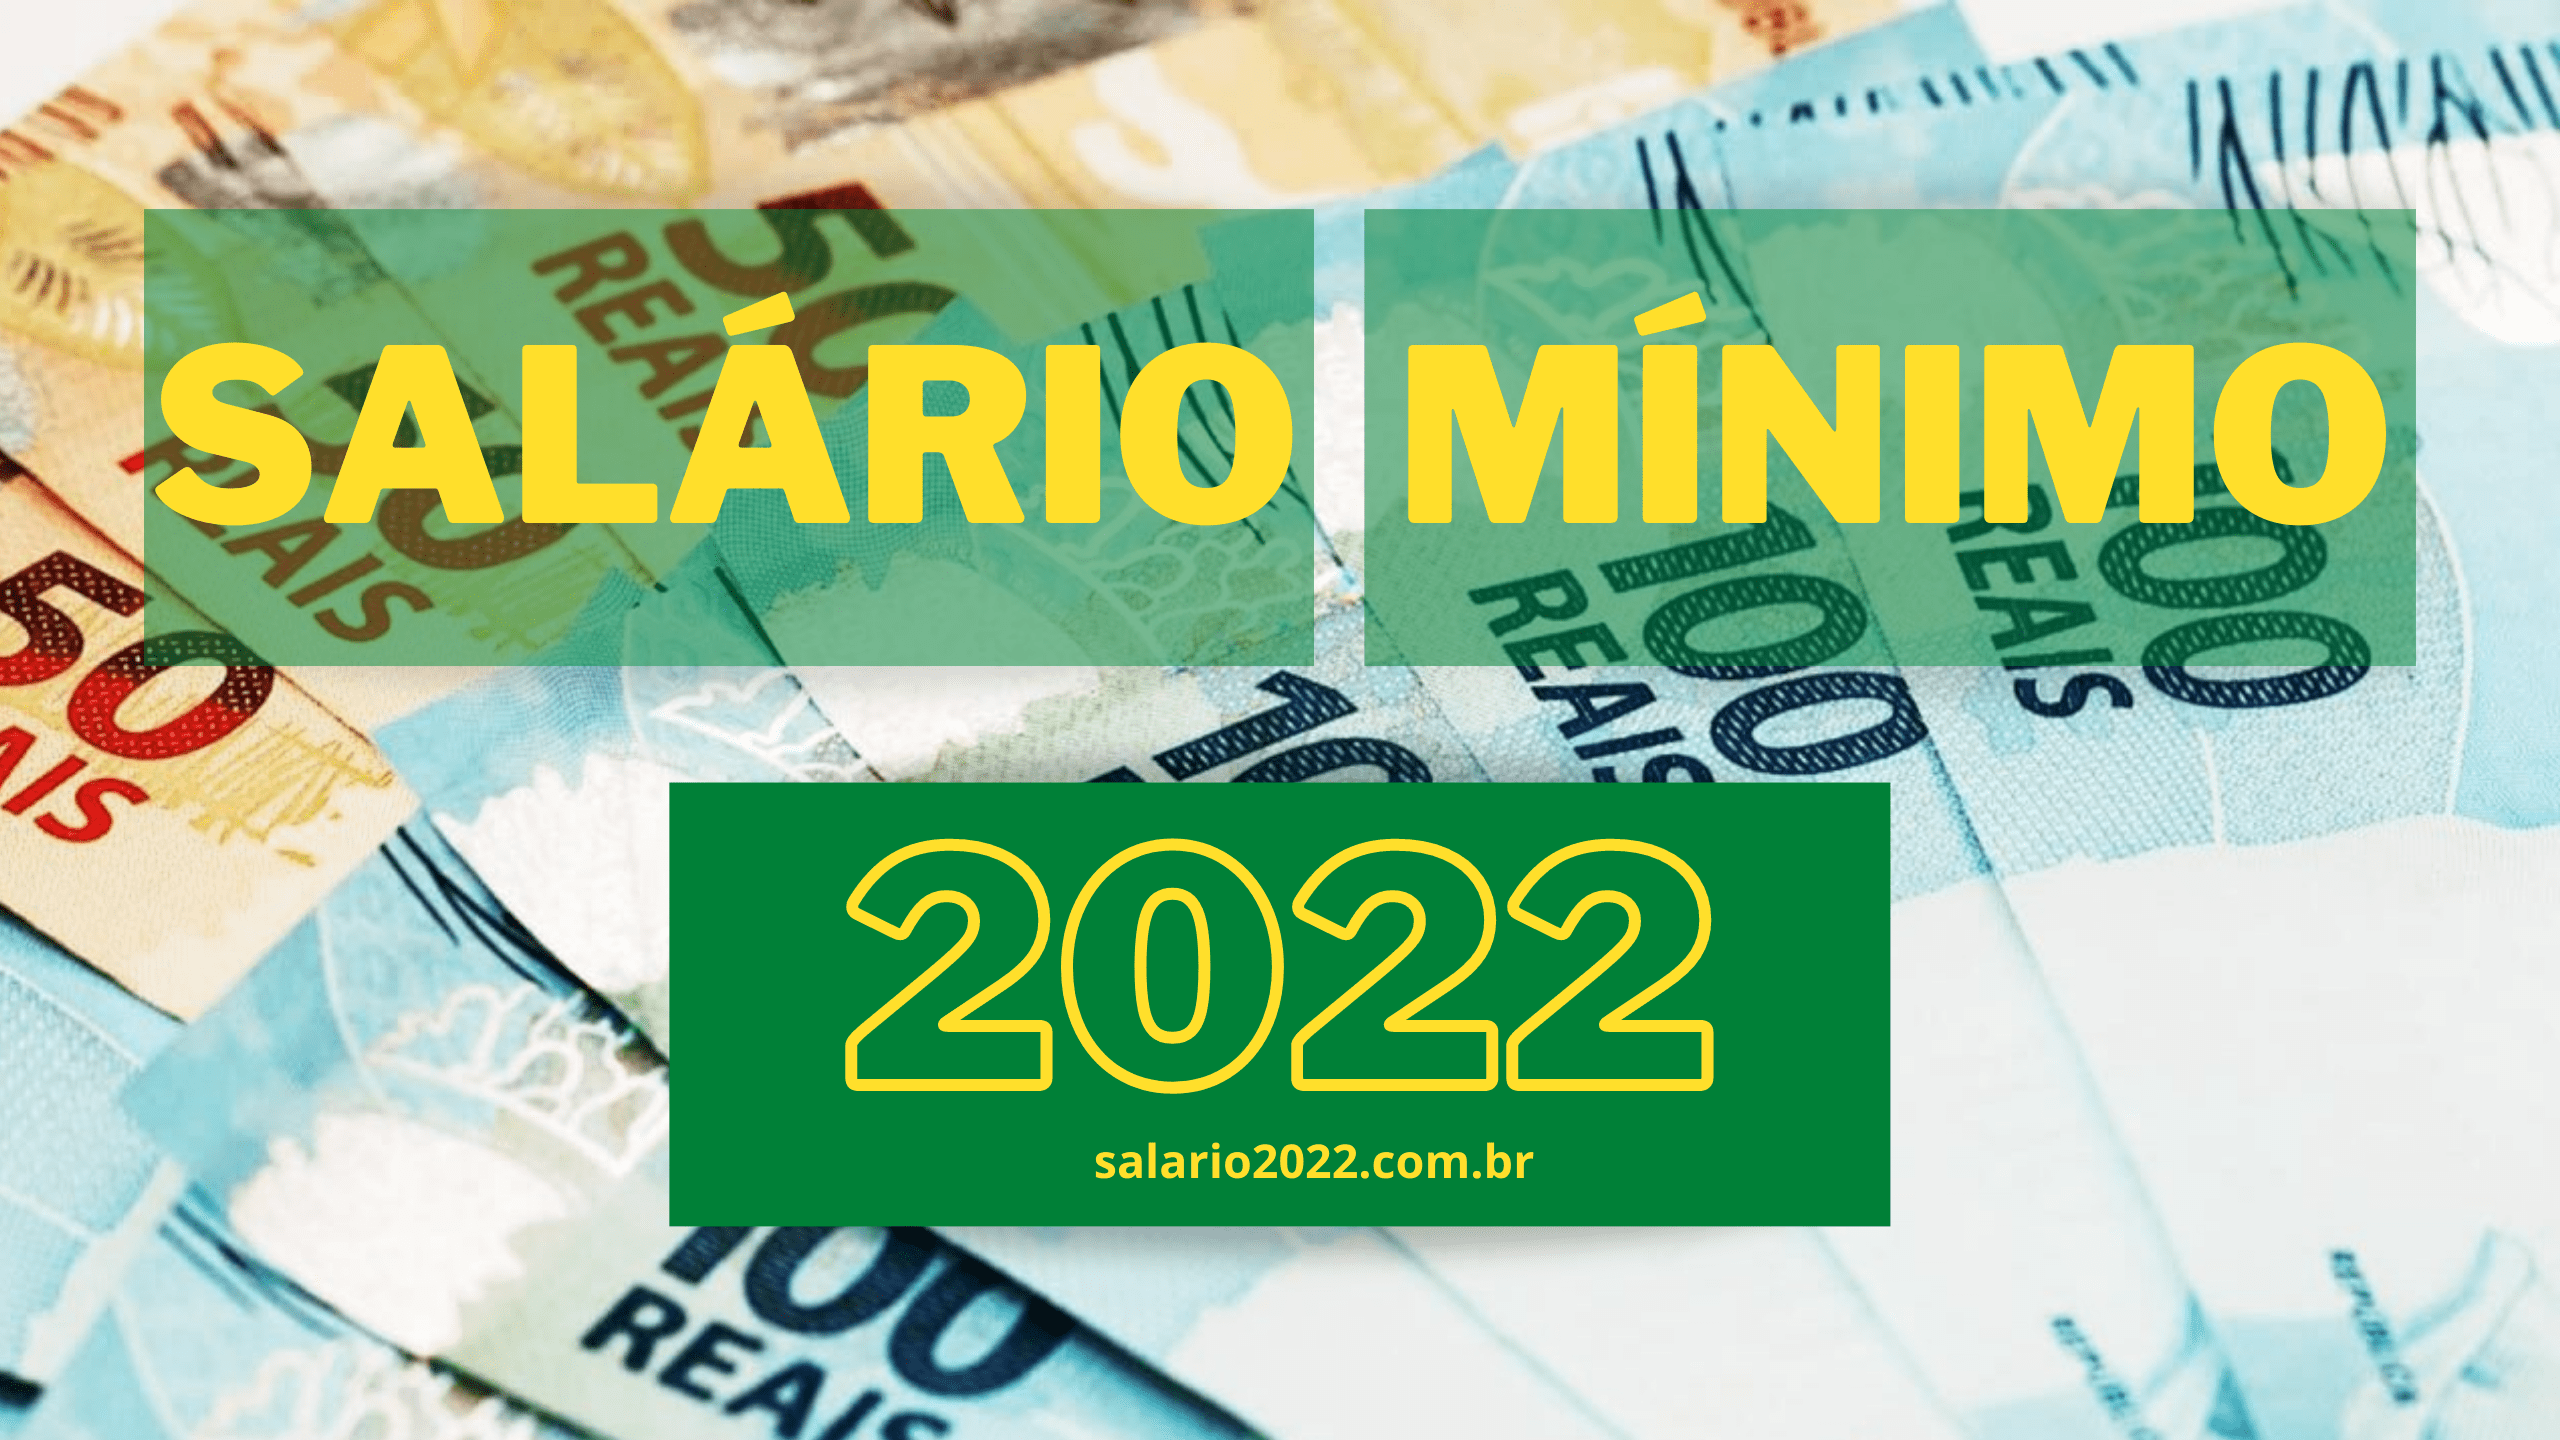 Salario Minimo 2022 1 - Silva Pinto Assessoria Contábil